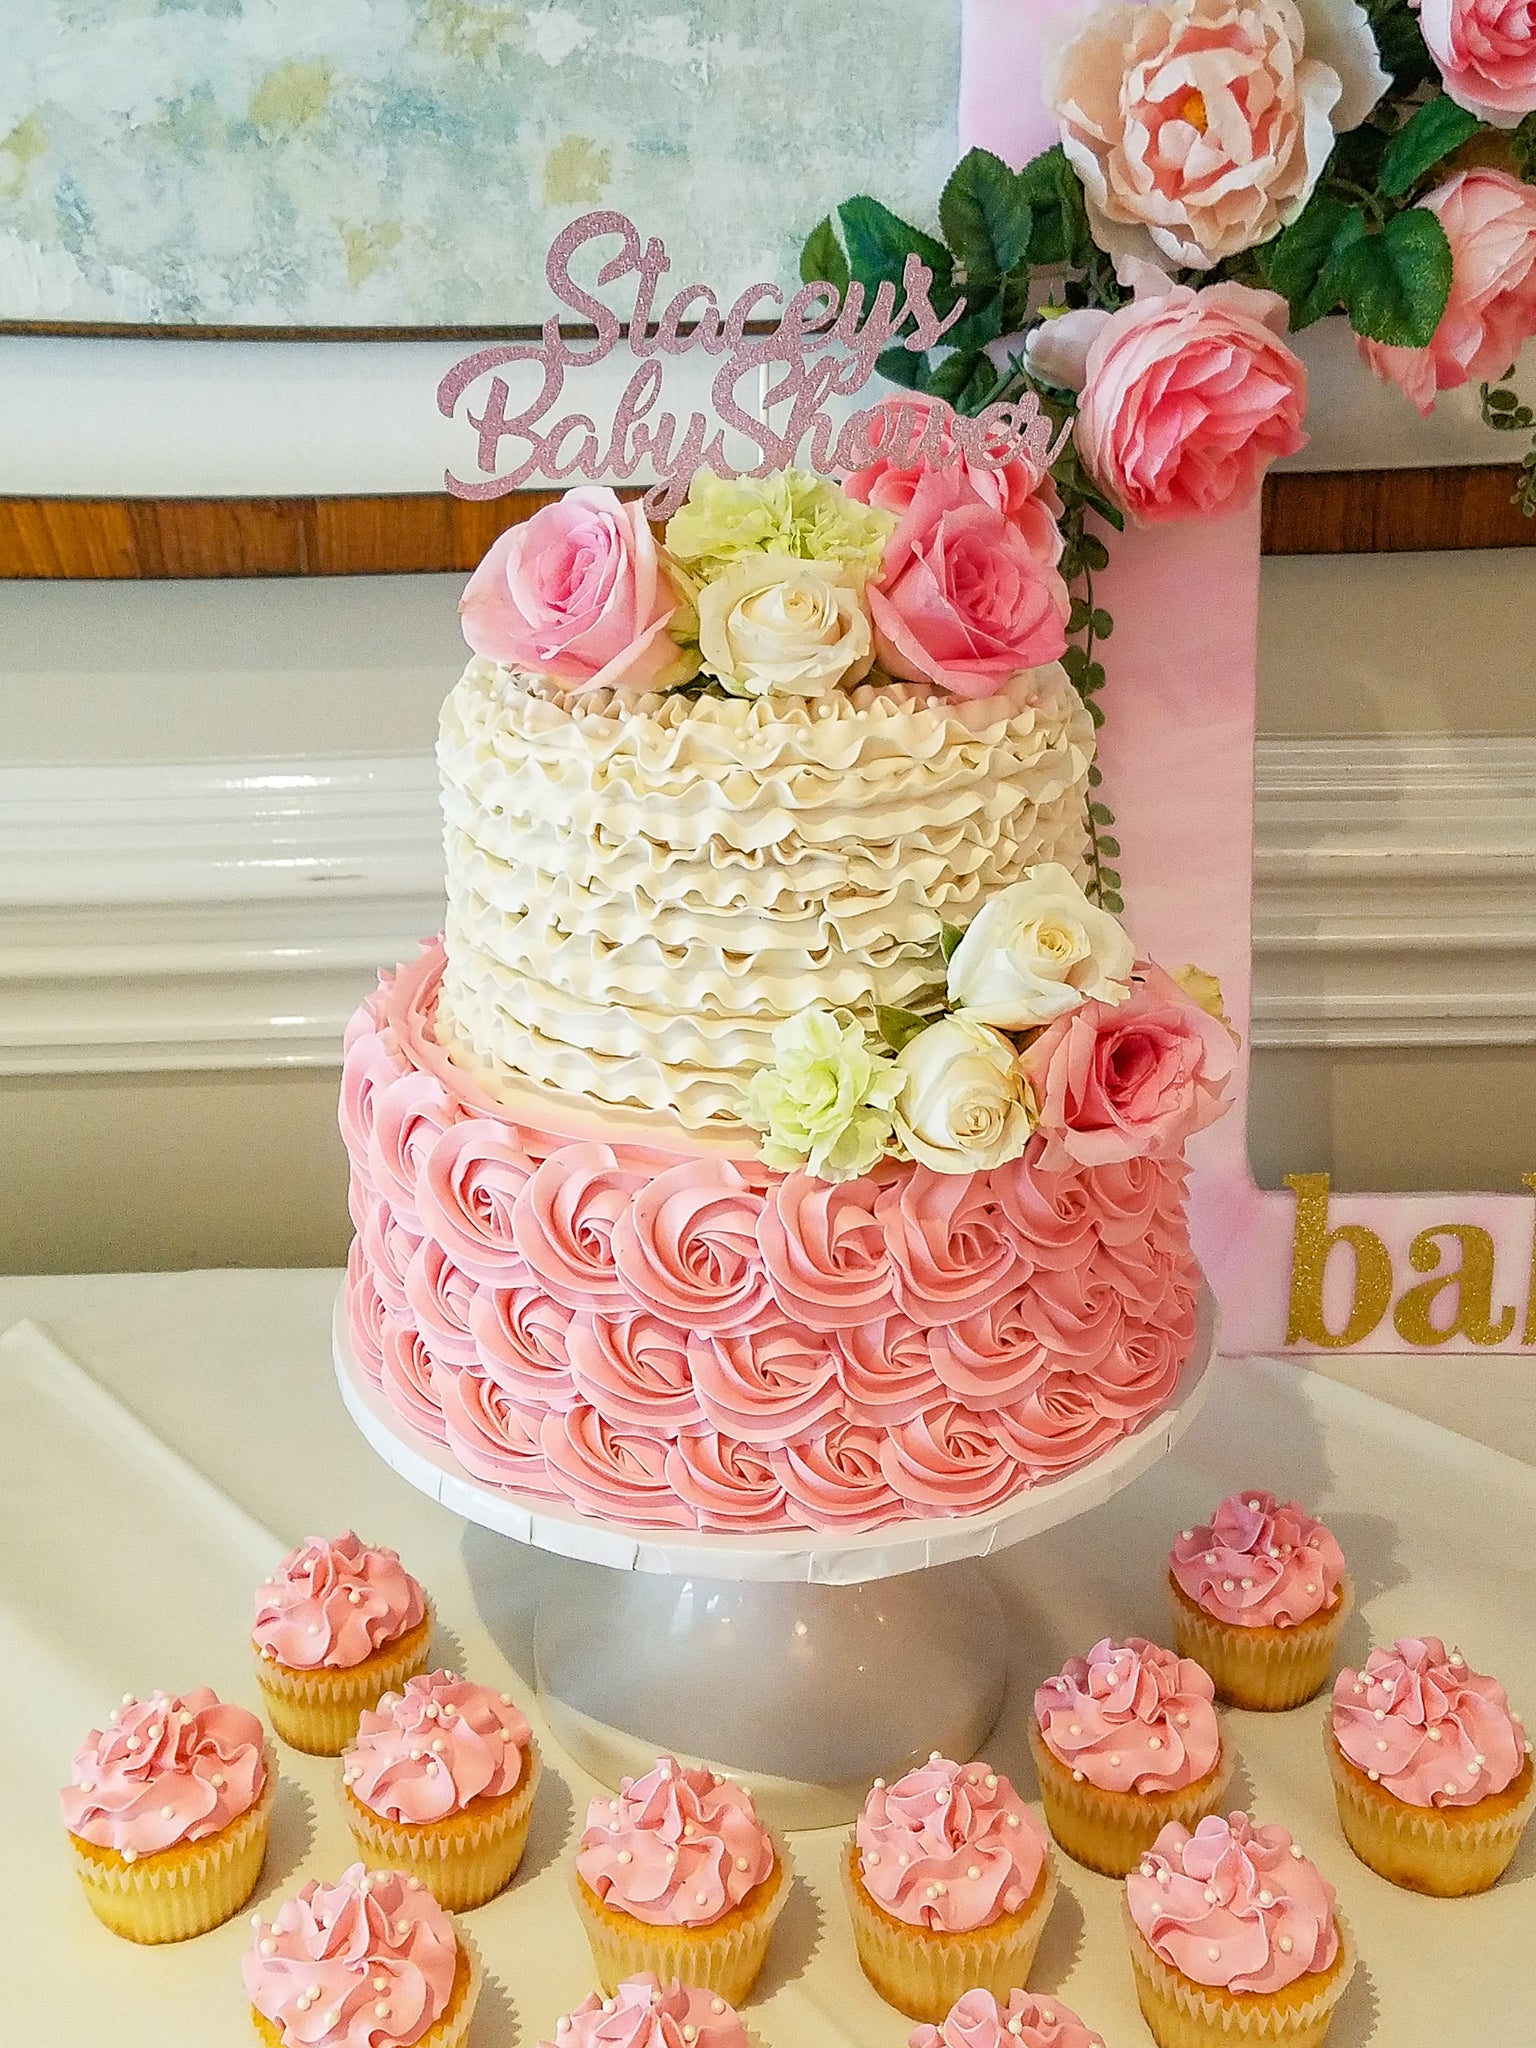 Bake 4 Cake, Ballabhgarh order online - Zomato